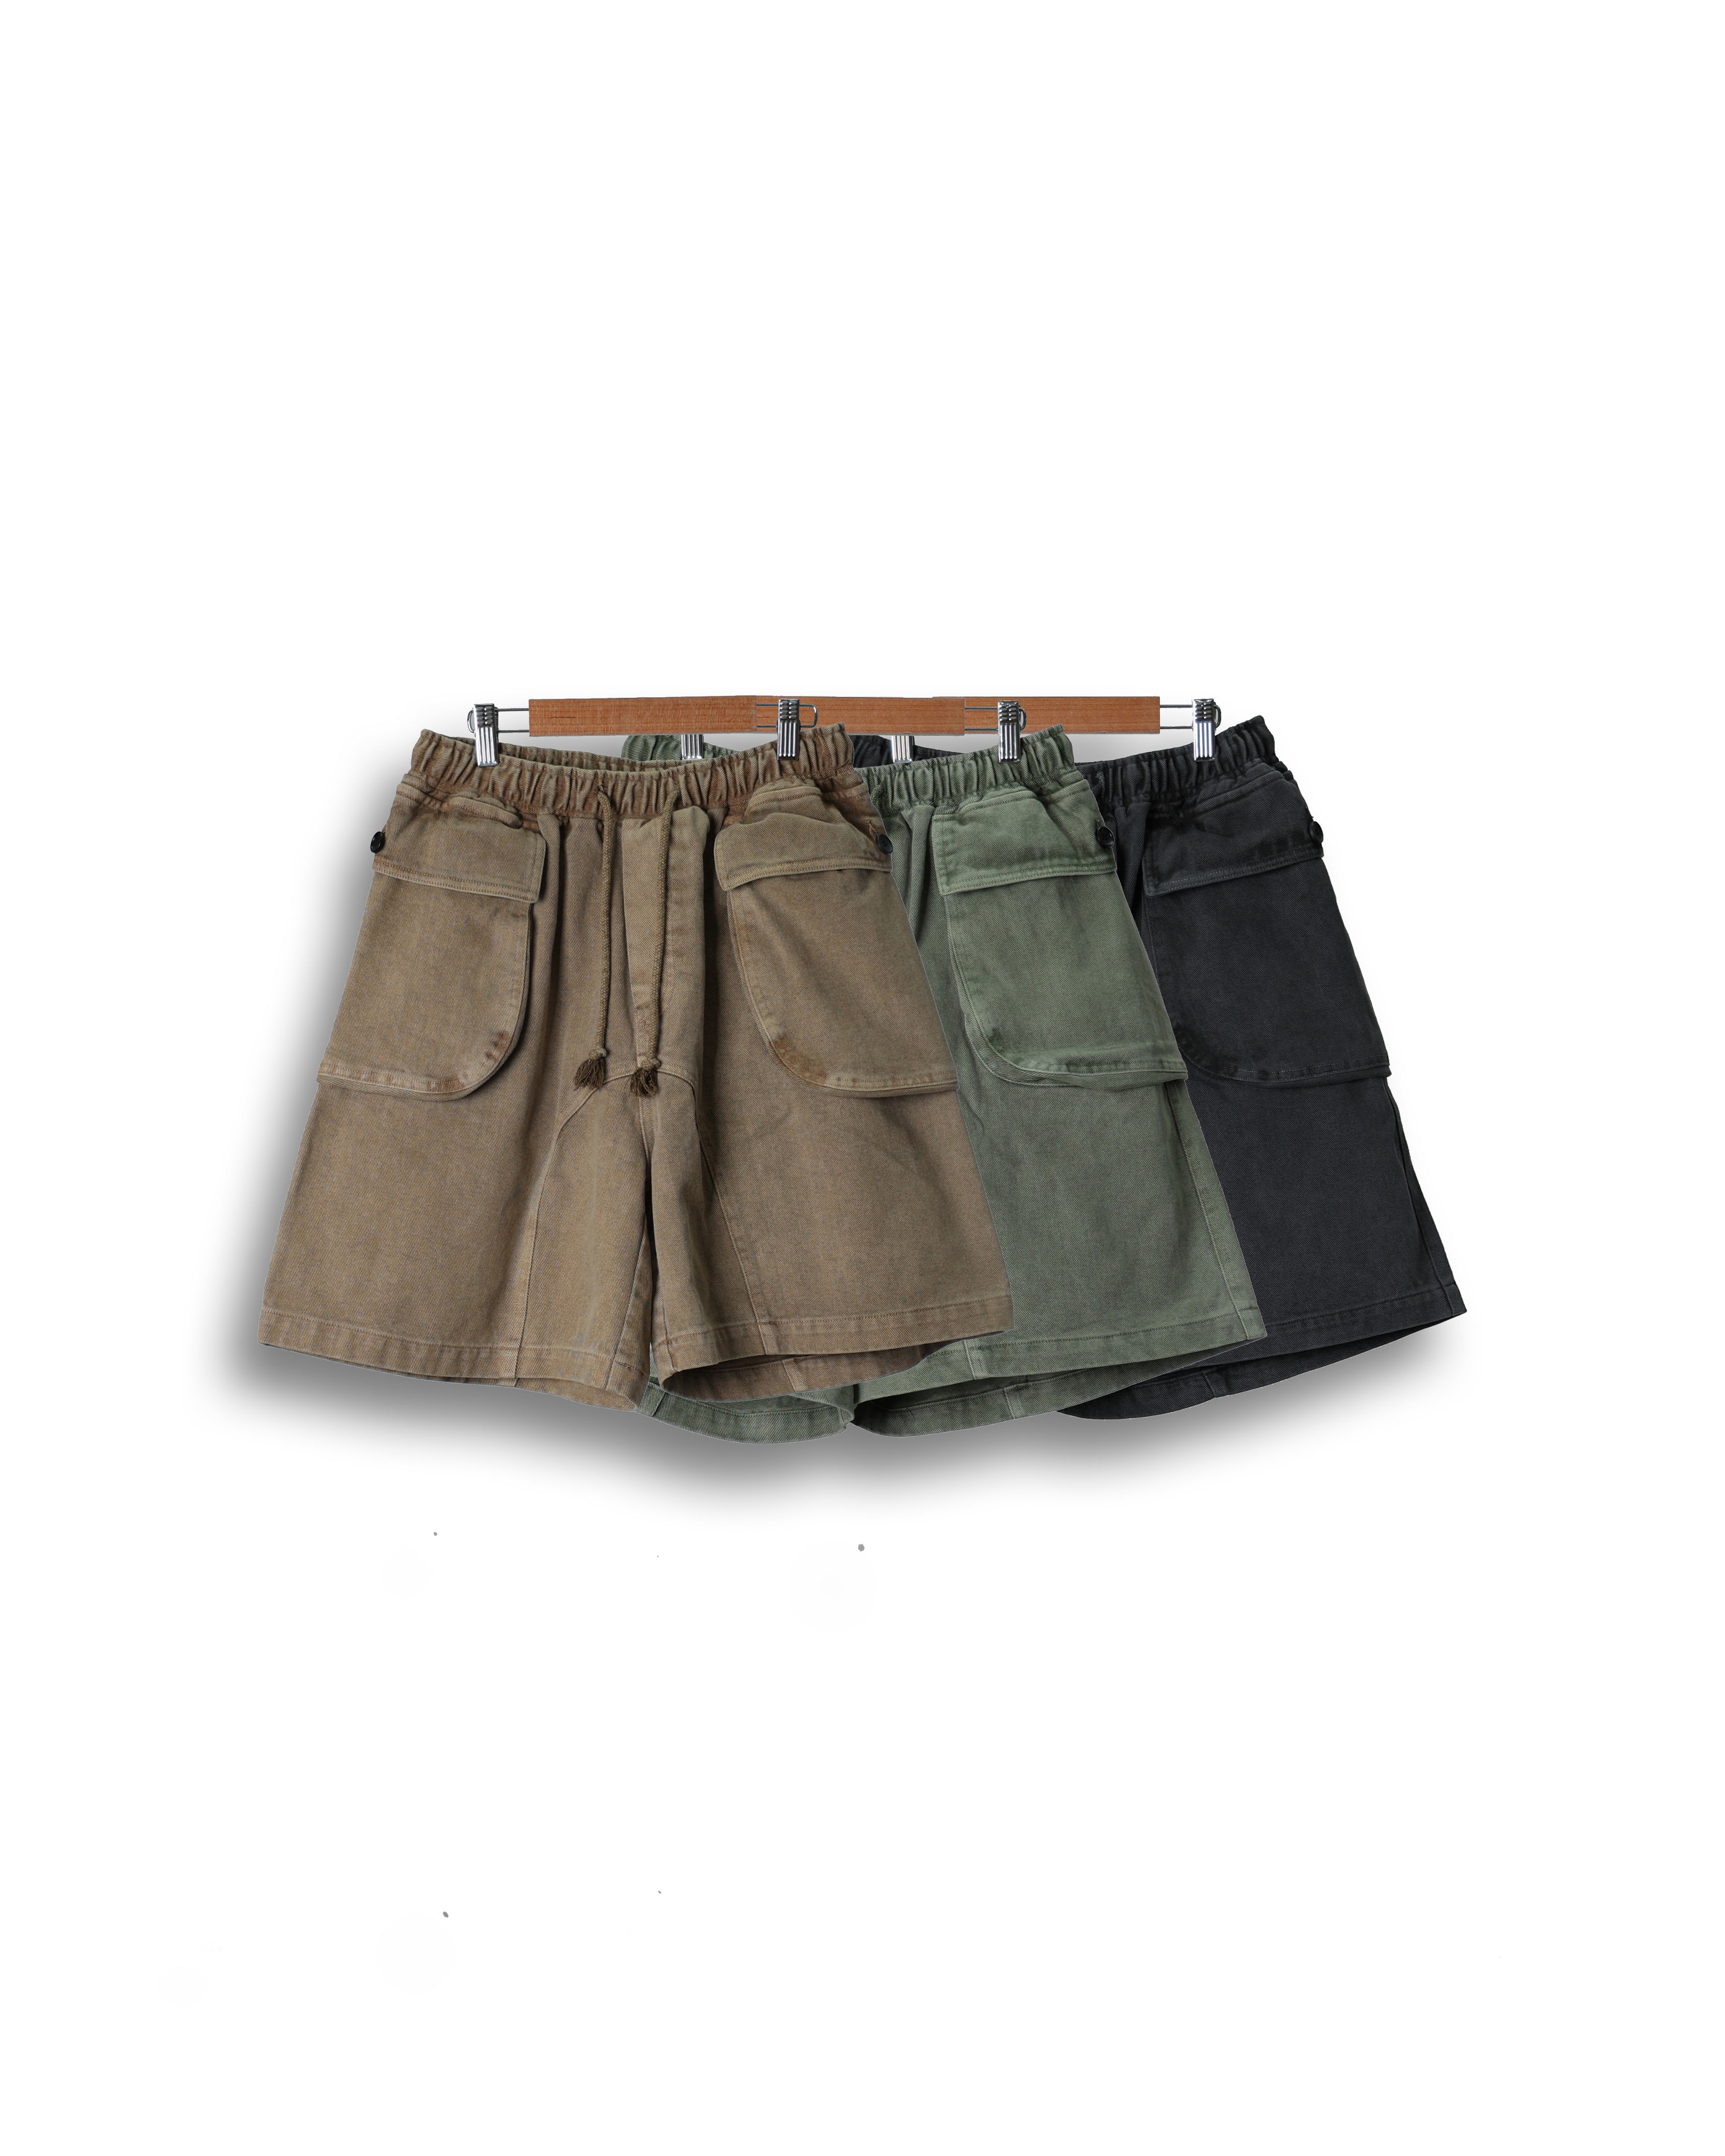 LIBERT Dimention Big Cargo Half Pants  (Charcoal/Olive/Beige)